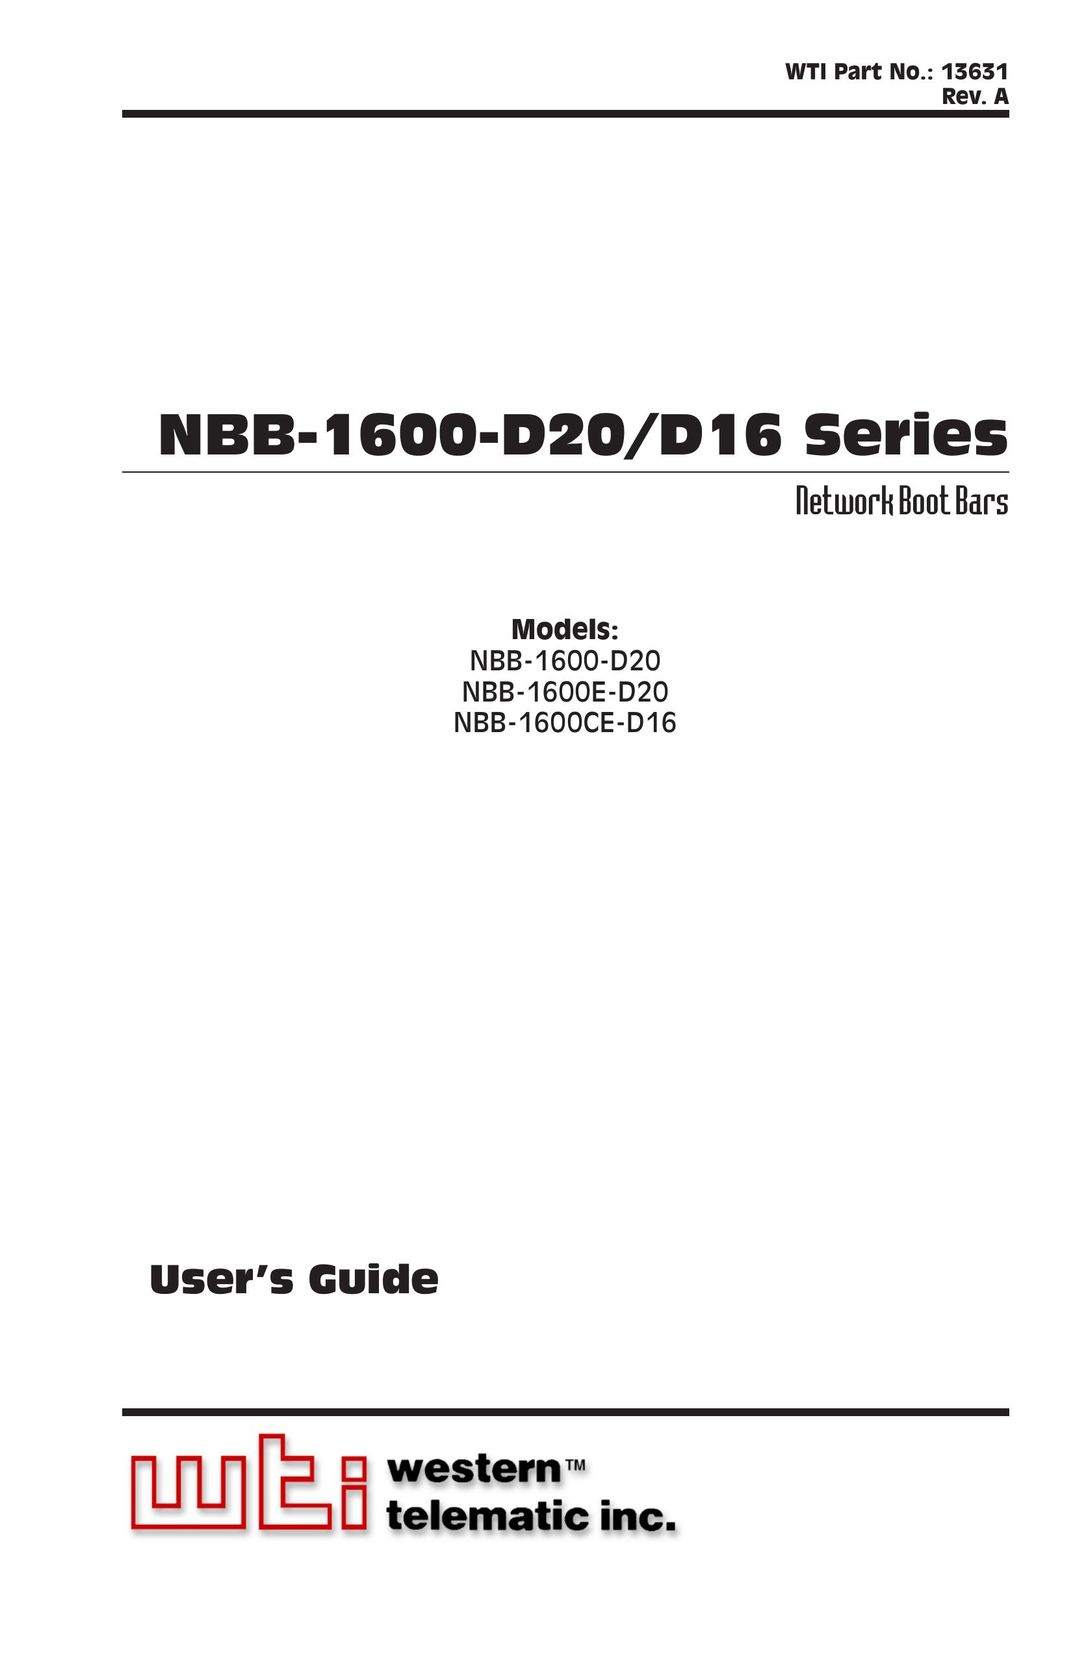 Western Telematic NBB-1600-D20, NBB-1600DE-D20, NBB-1600CE-D16 Network Card User Manual